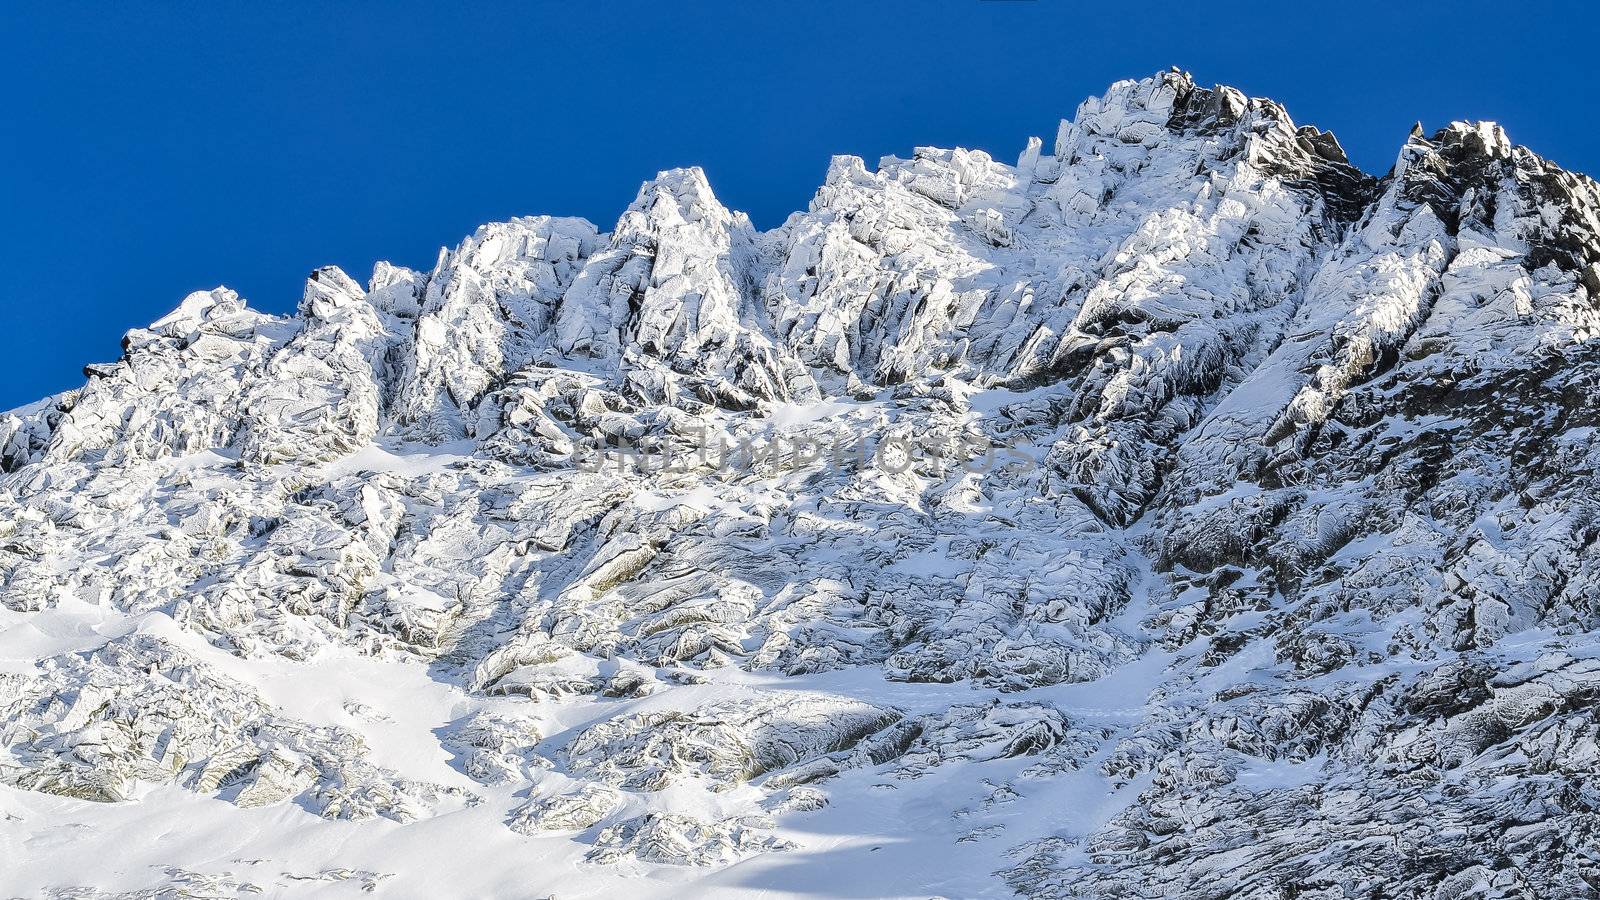 Winter rocky mountain peak by martinm303